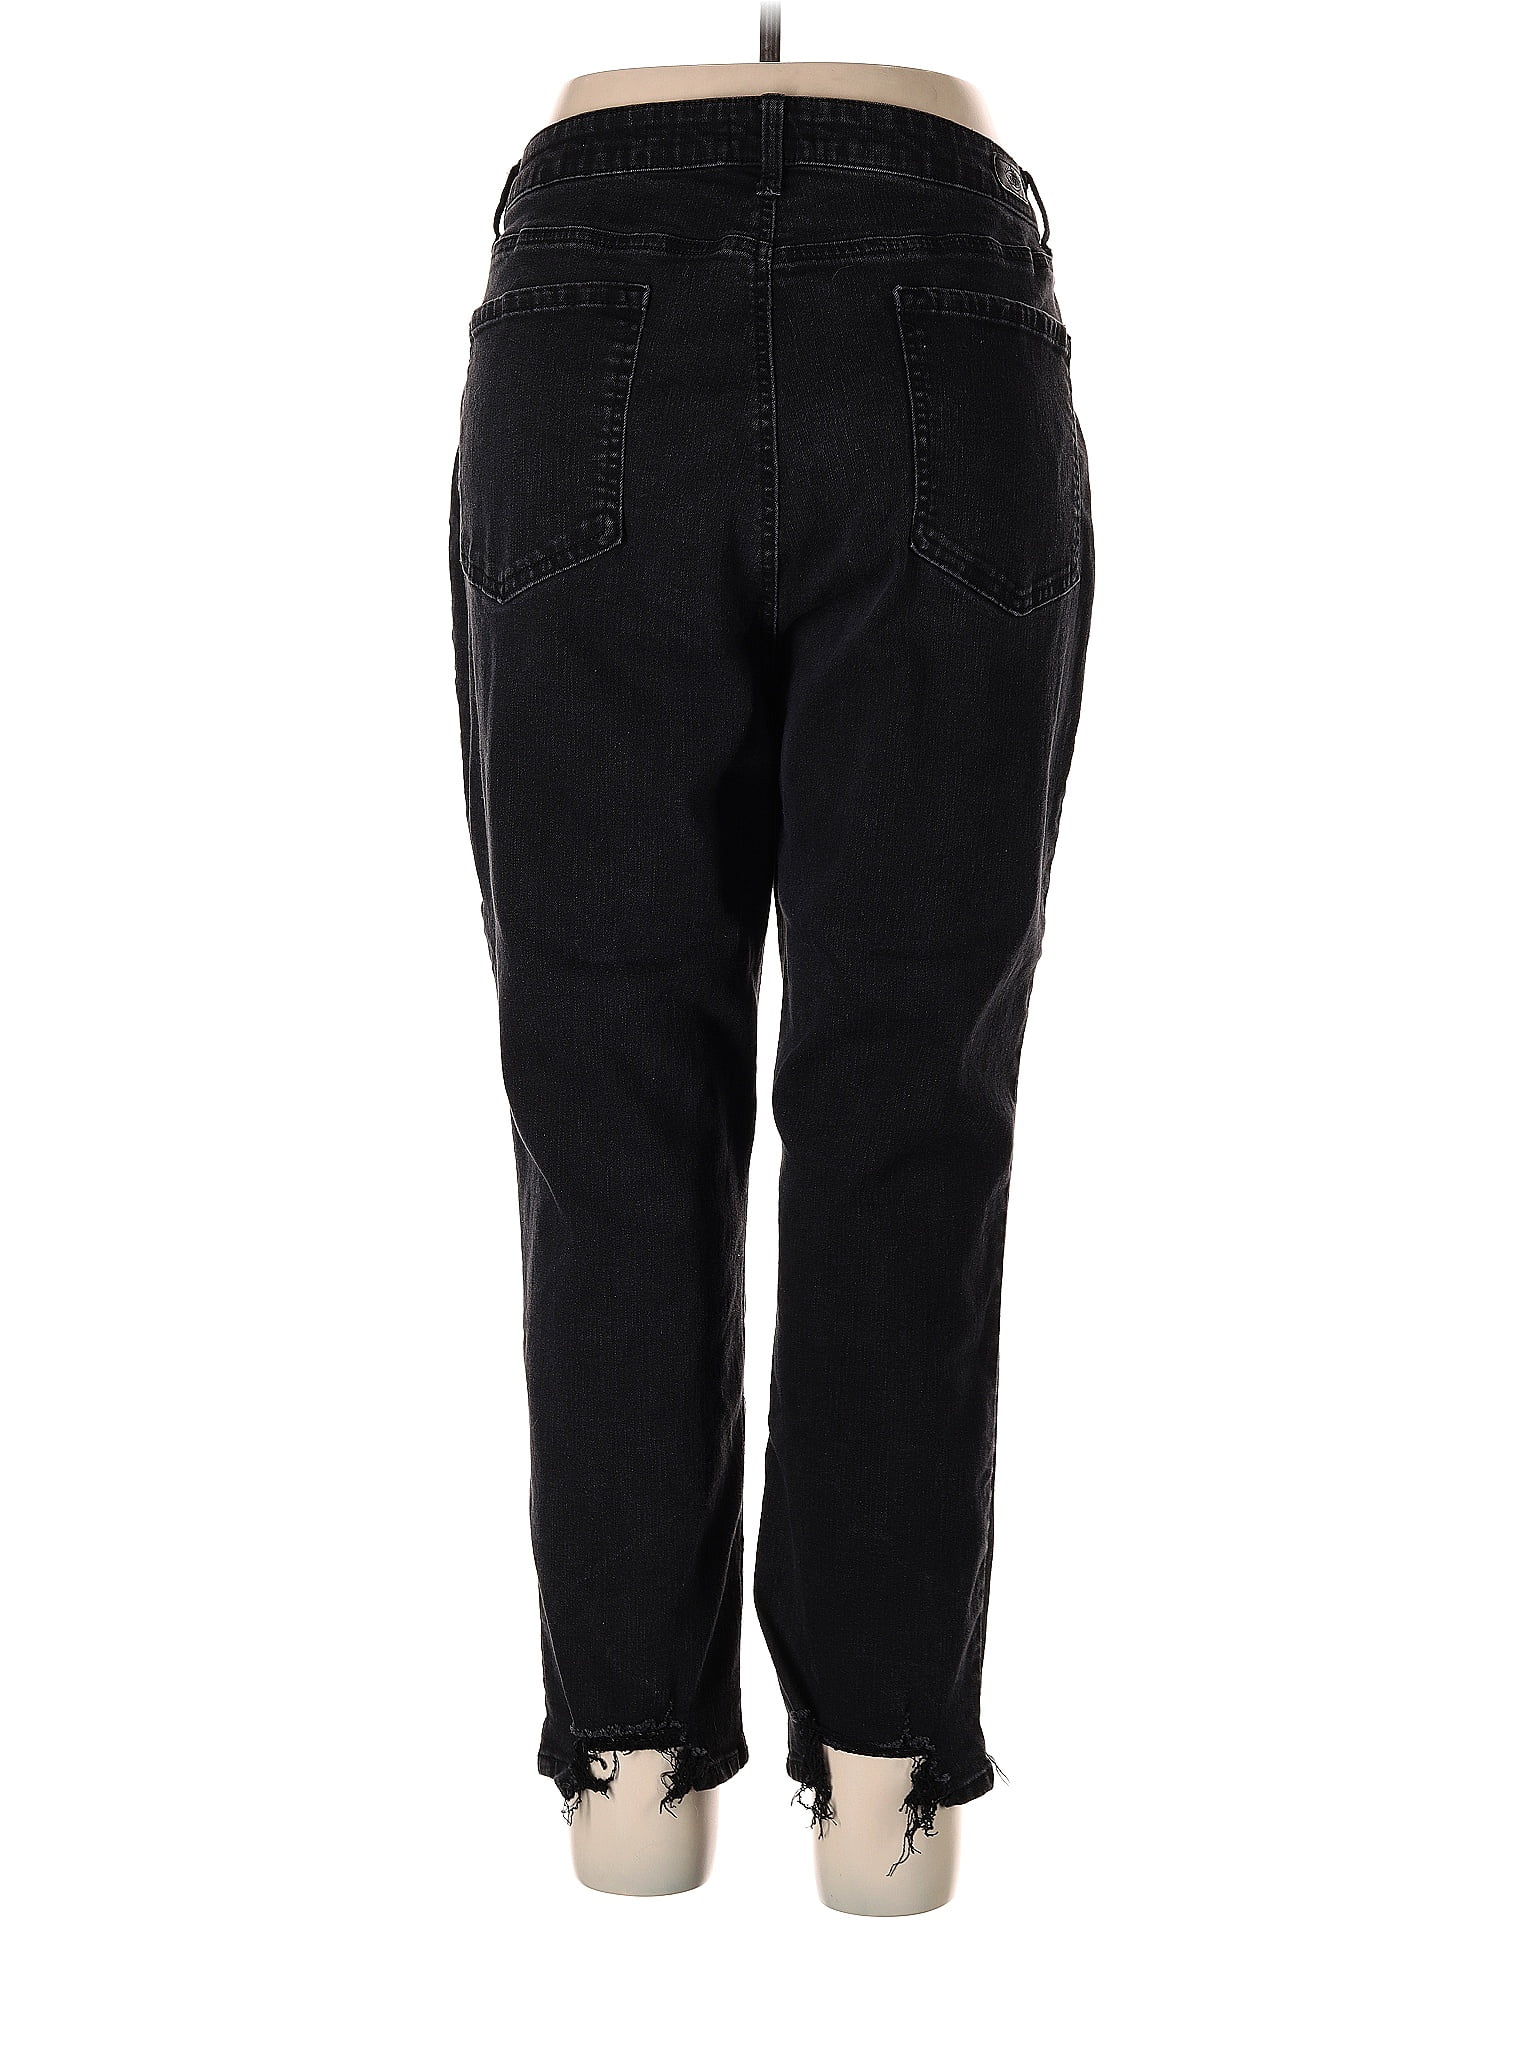 Sofia by Sofia Vergara Black Jeans Size 20 (Plus) - 46% off